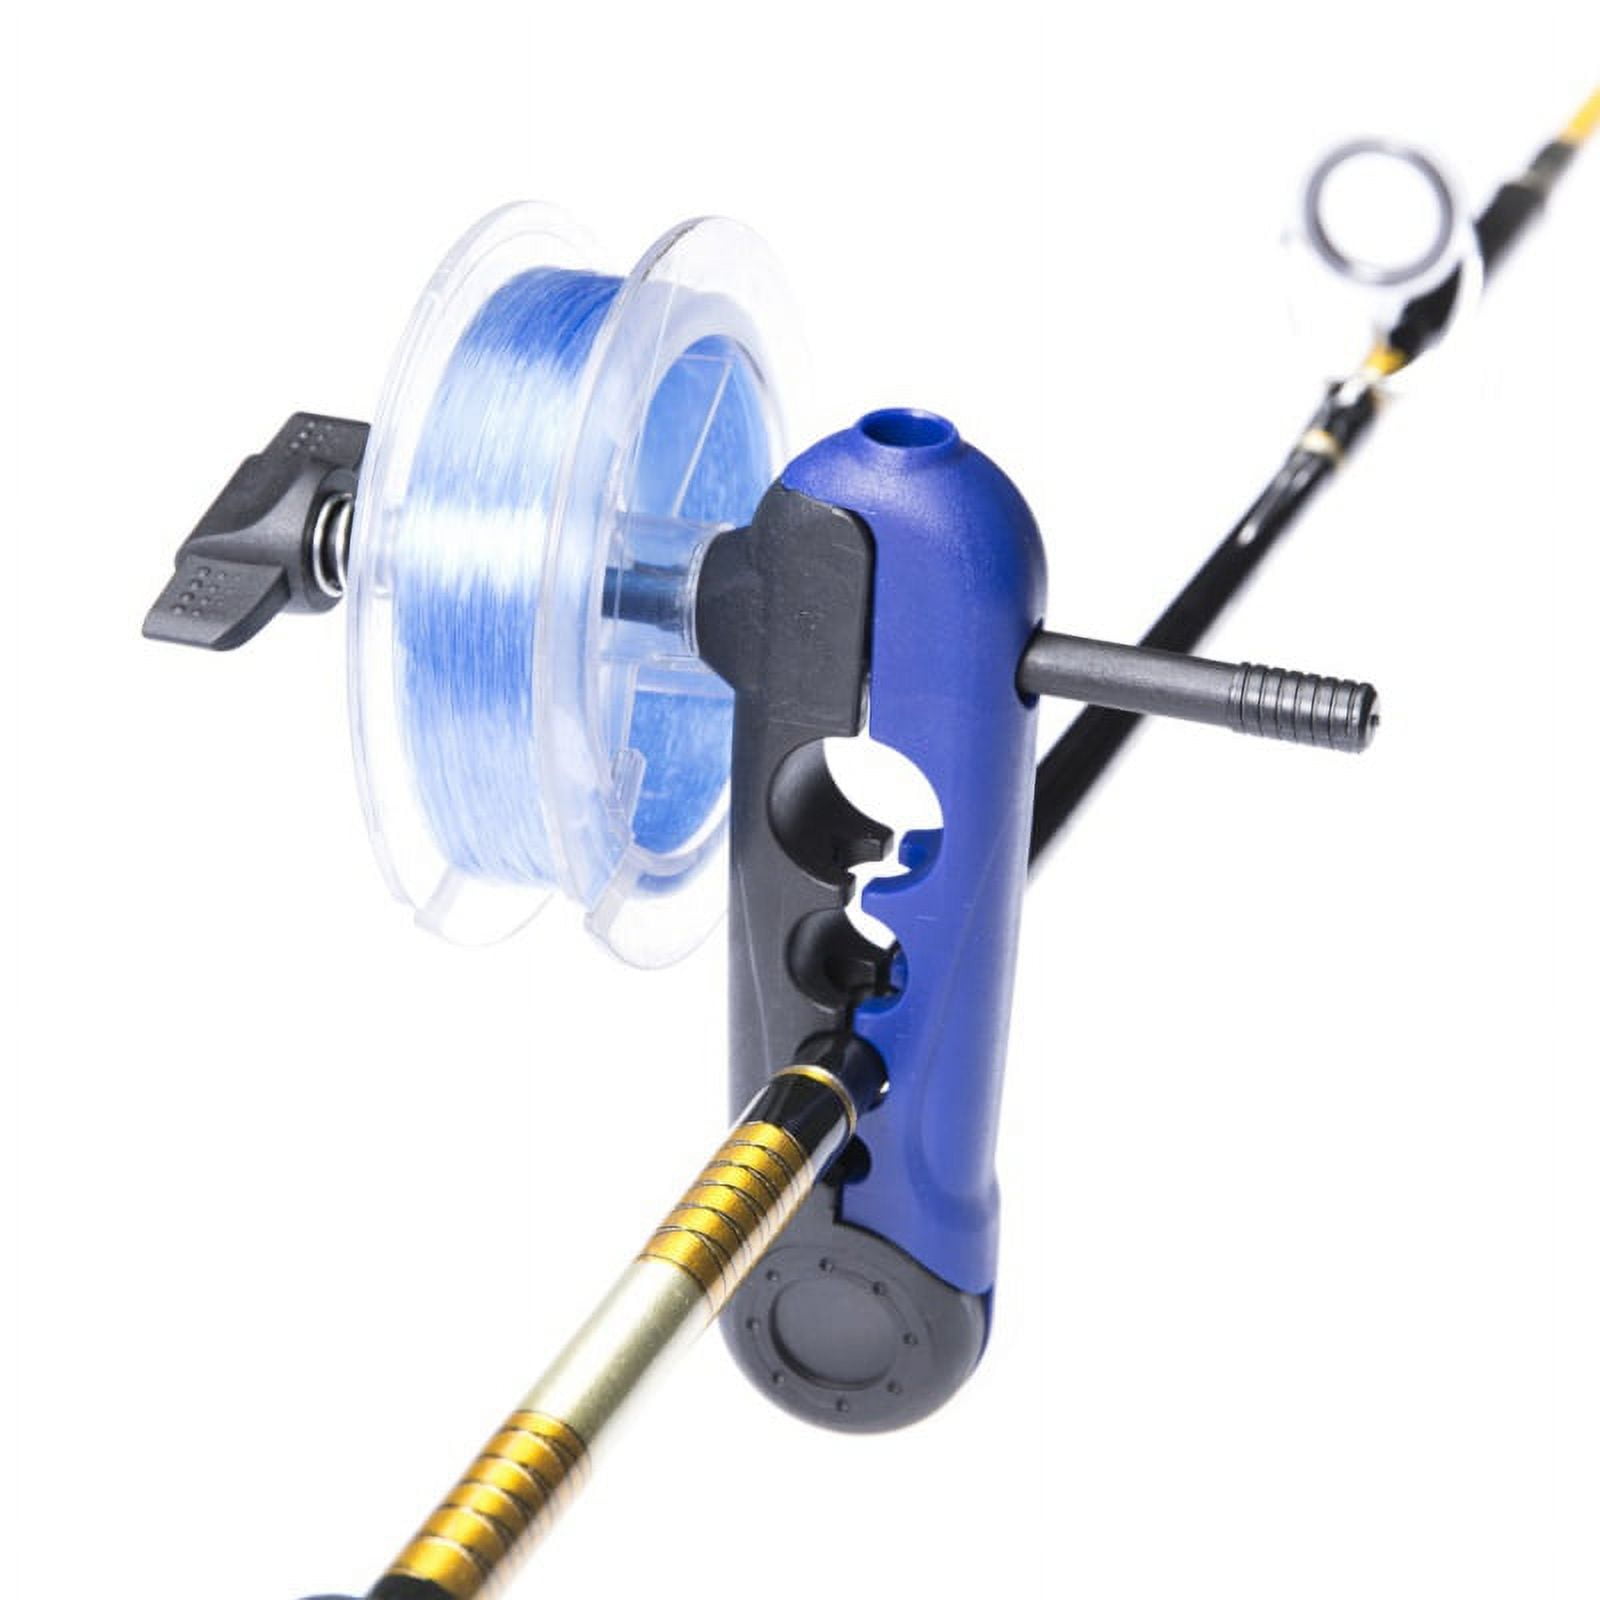 Cheap Portable Universal Fishing Line Spooler Adjustable for Various Sizes  Fishing Rod Bobbin Spool Line